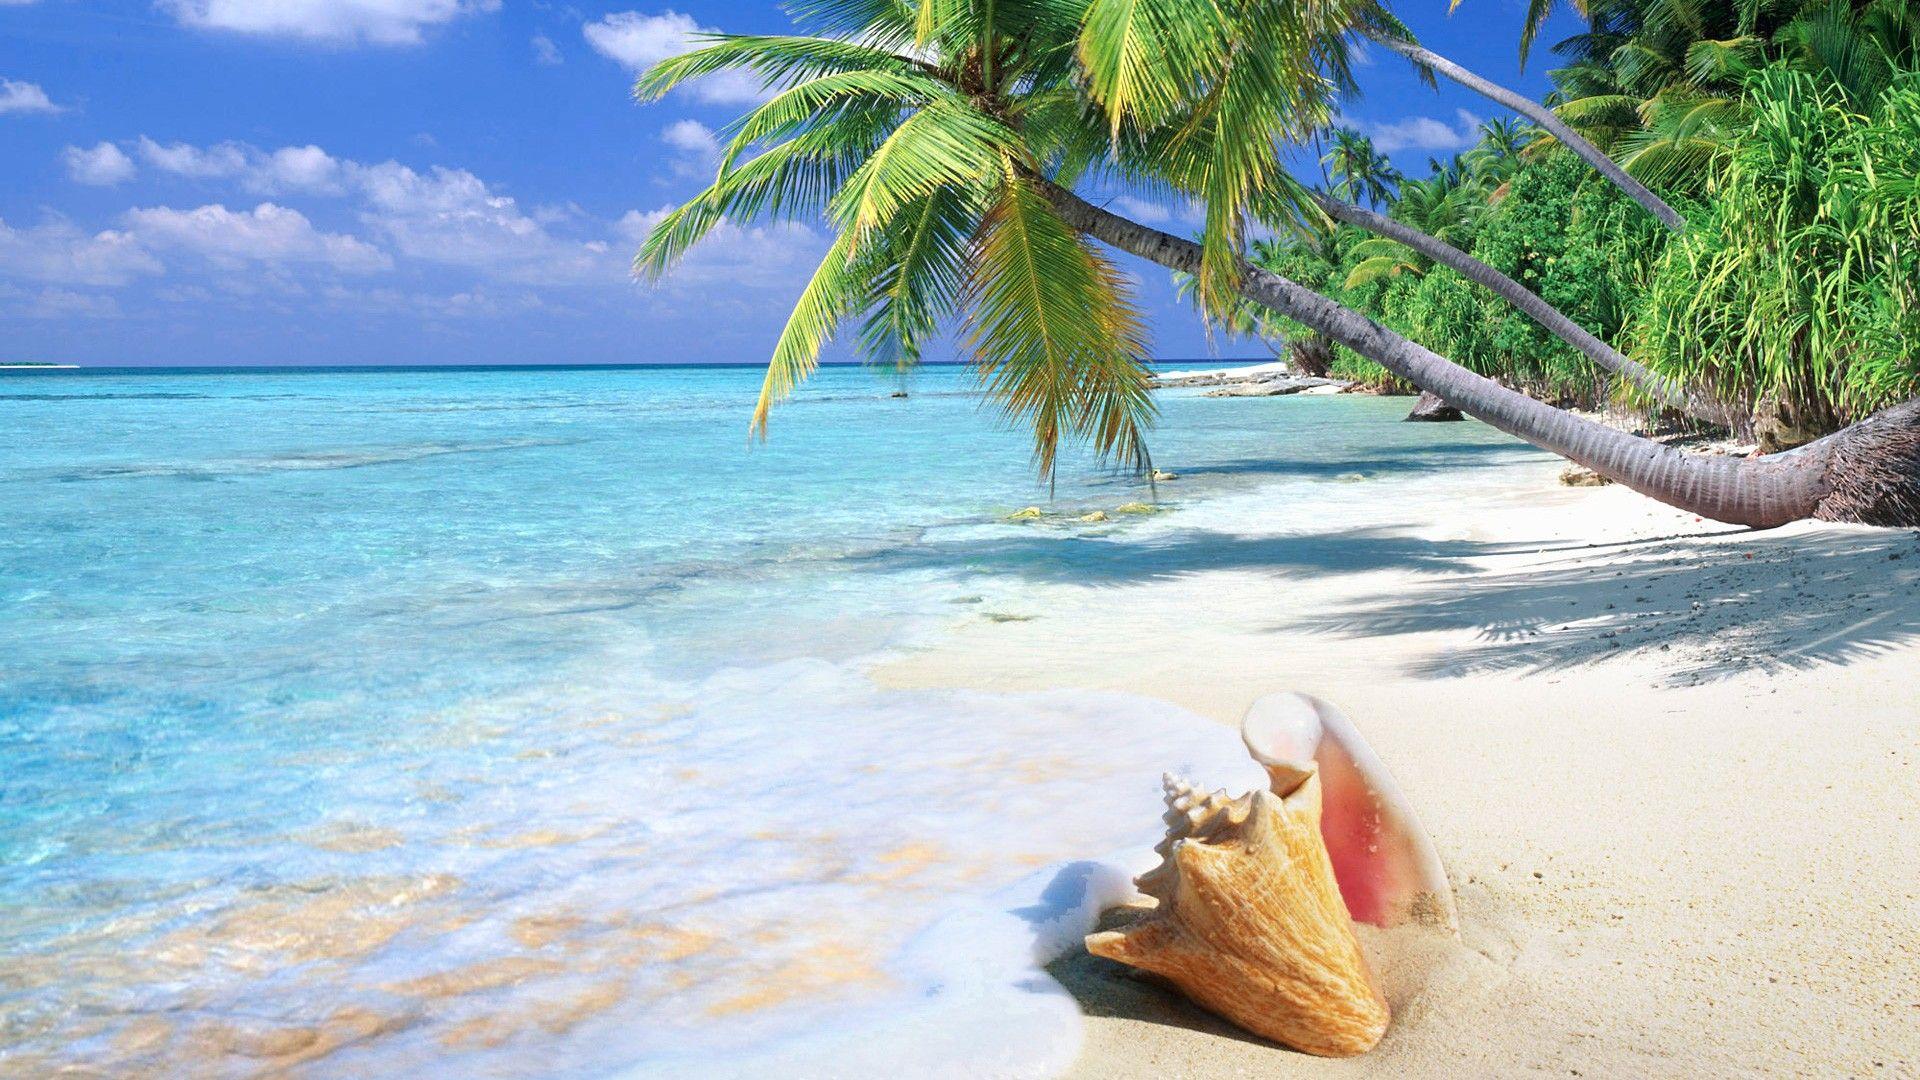 Beach Scenes Desktop Wallpapers - Top Free Beach Scenes Desktop Backgrounds - WallpaperAccess